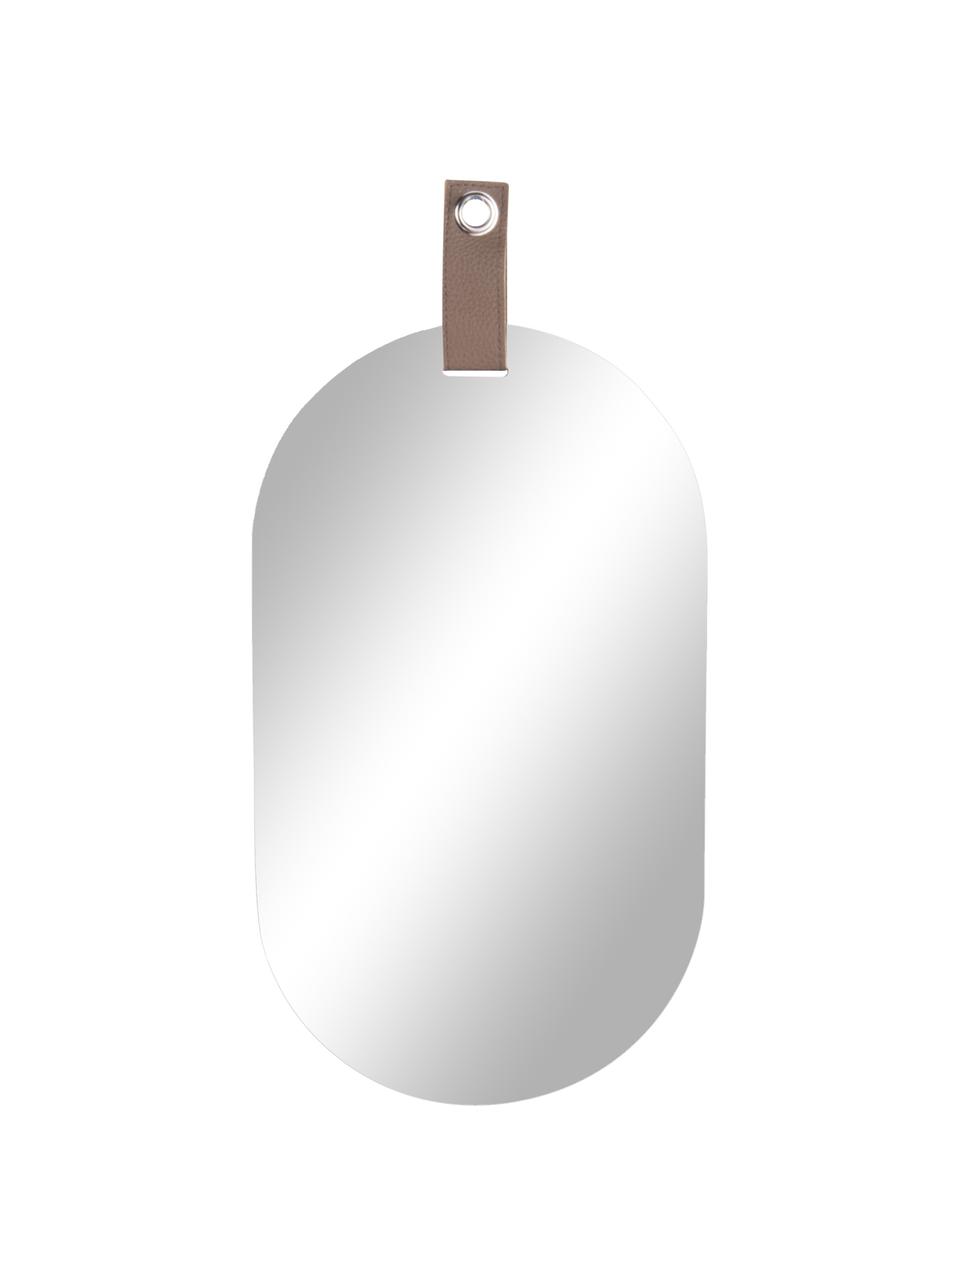 Ovale wandspiegel Perky met bruine ophangband, Spiegelglas, 22 x 39 cm